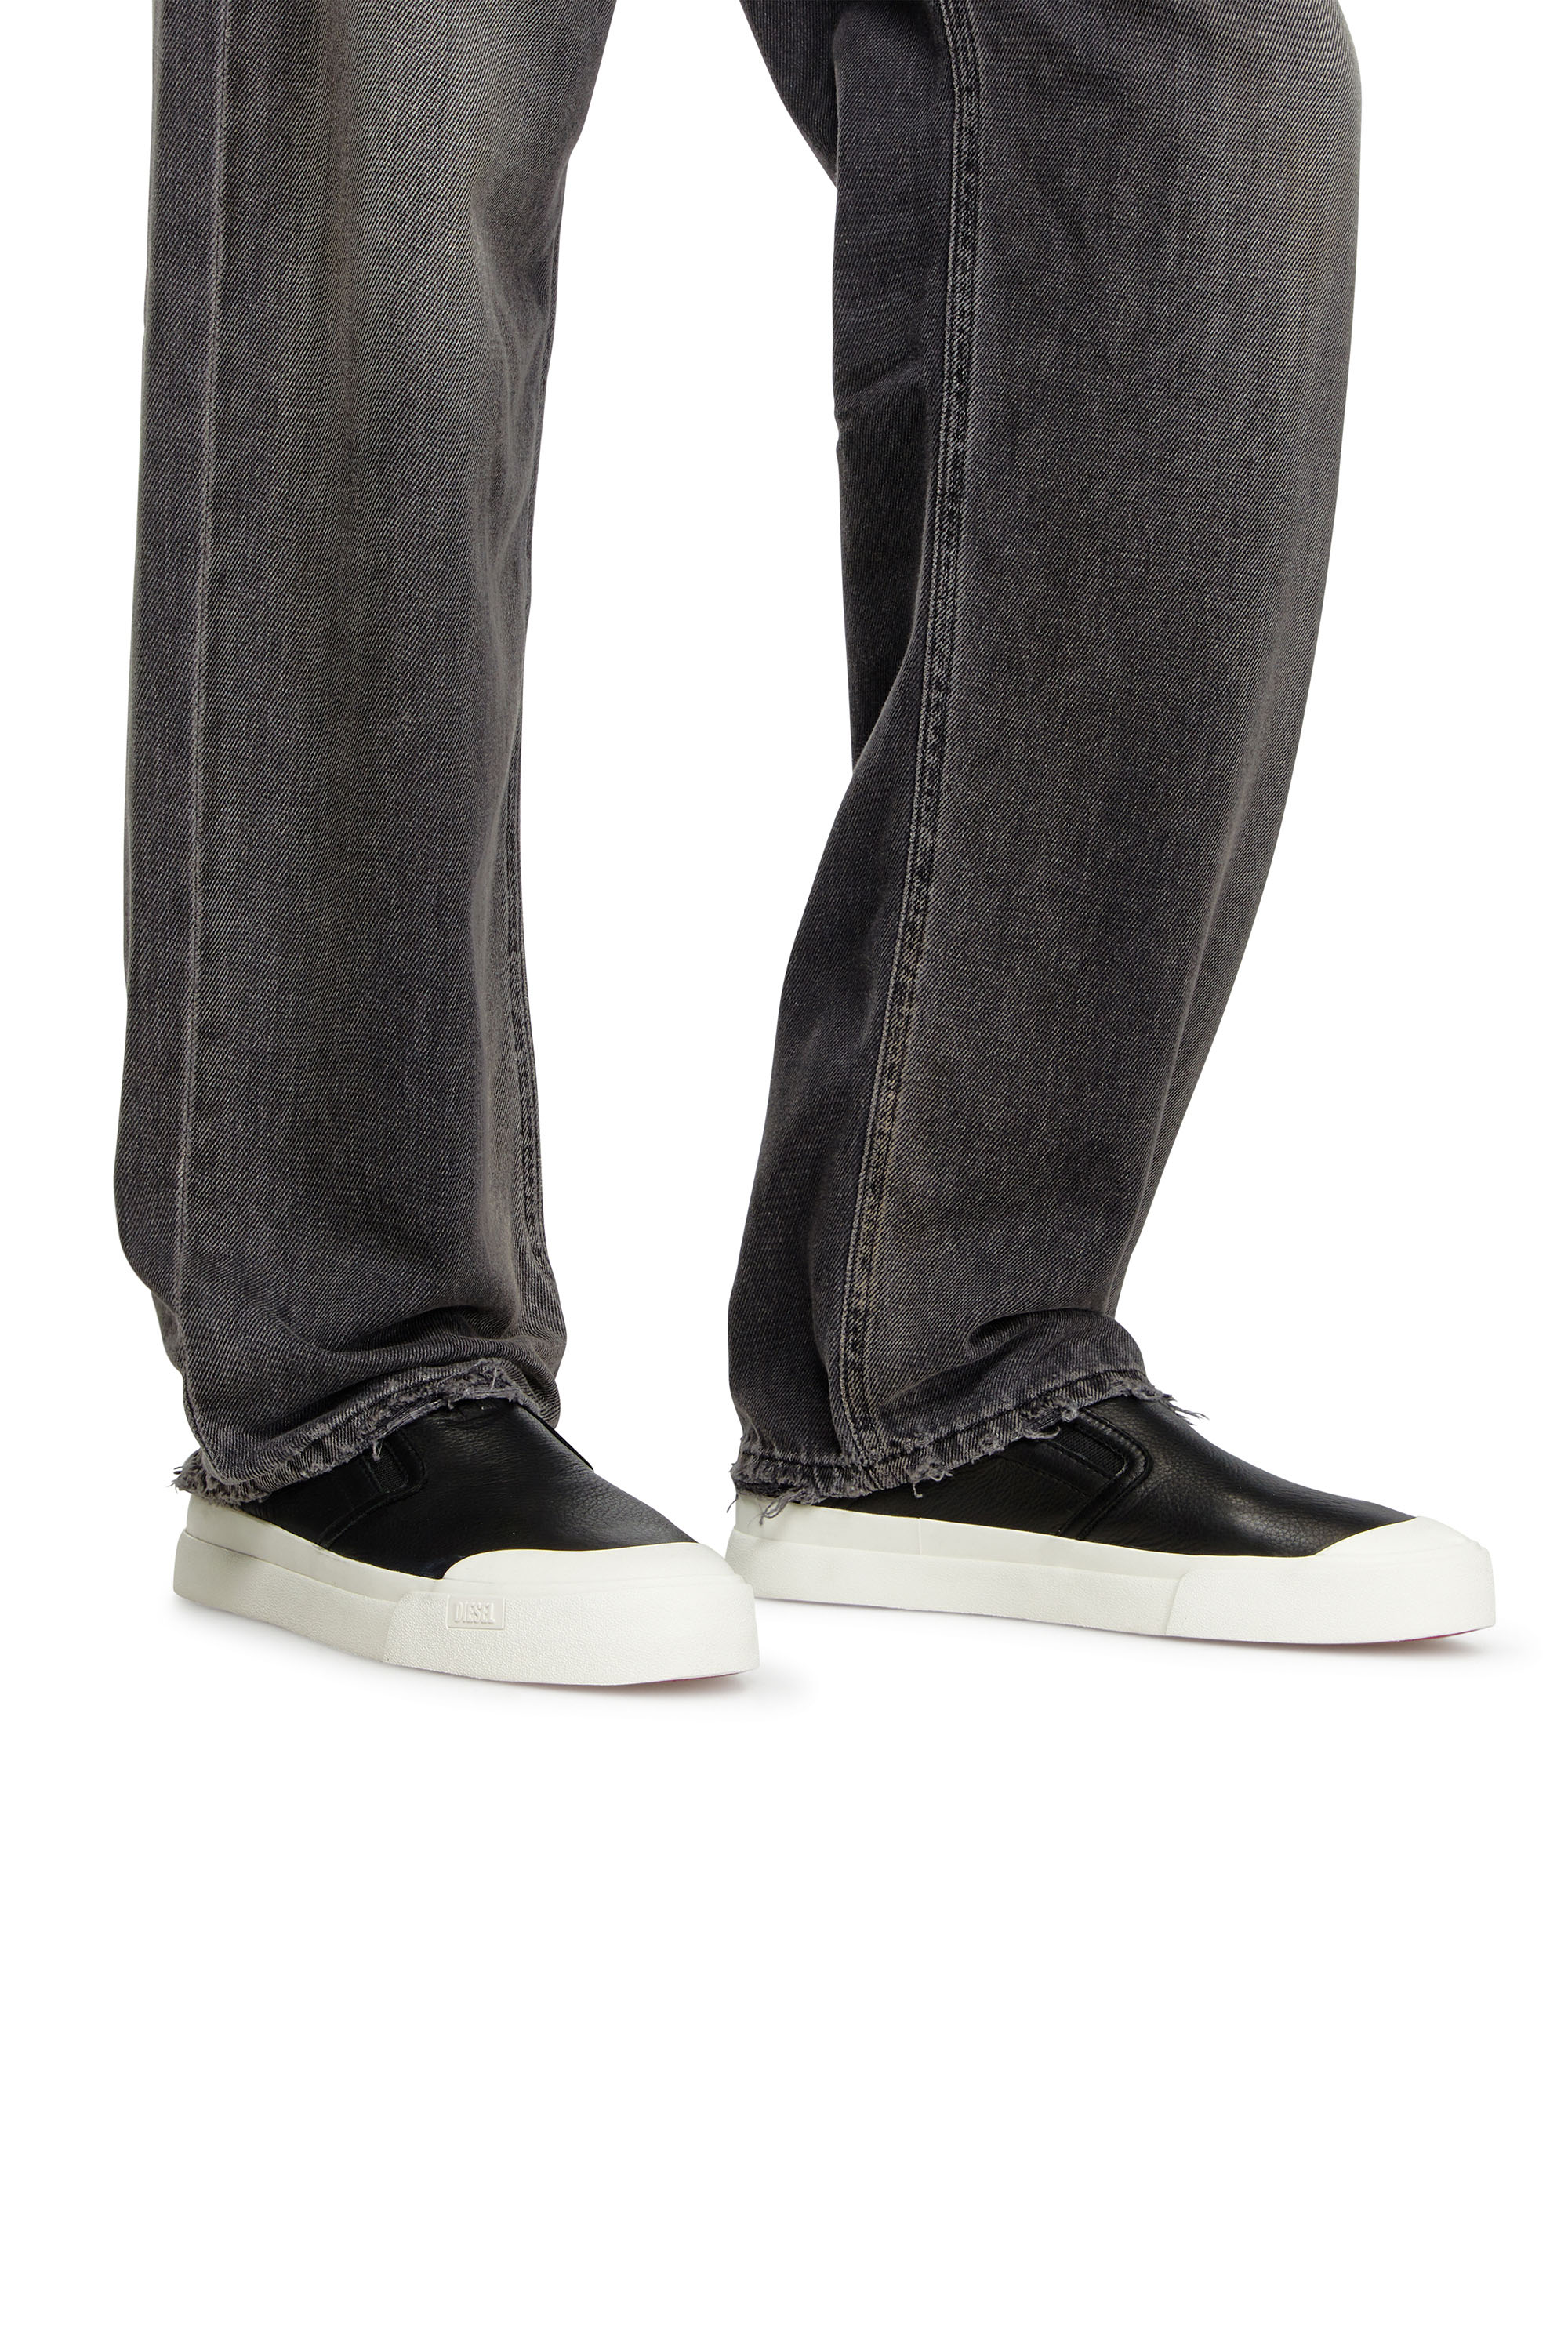 Diesel - S-ATHOS SLIP ON, Male S-Athos-Slip-on sneakers in plain leather in ブラック - Image 7